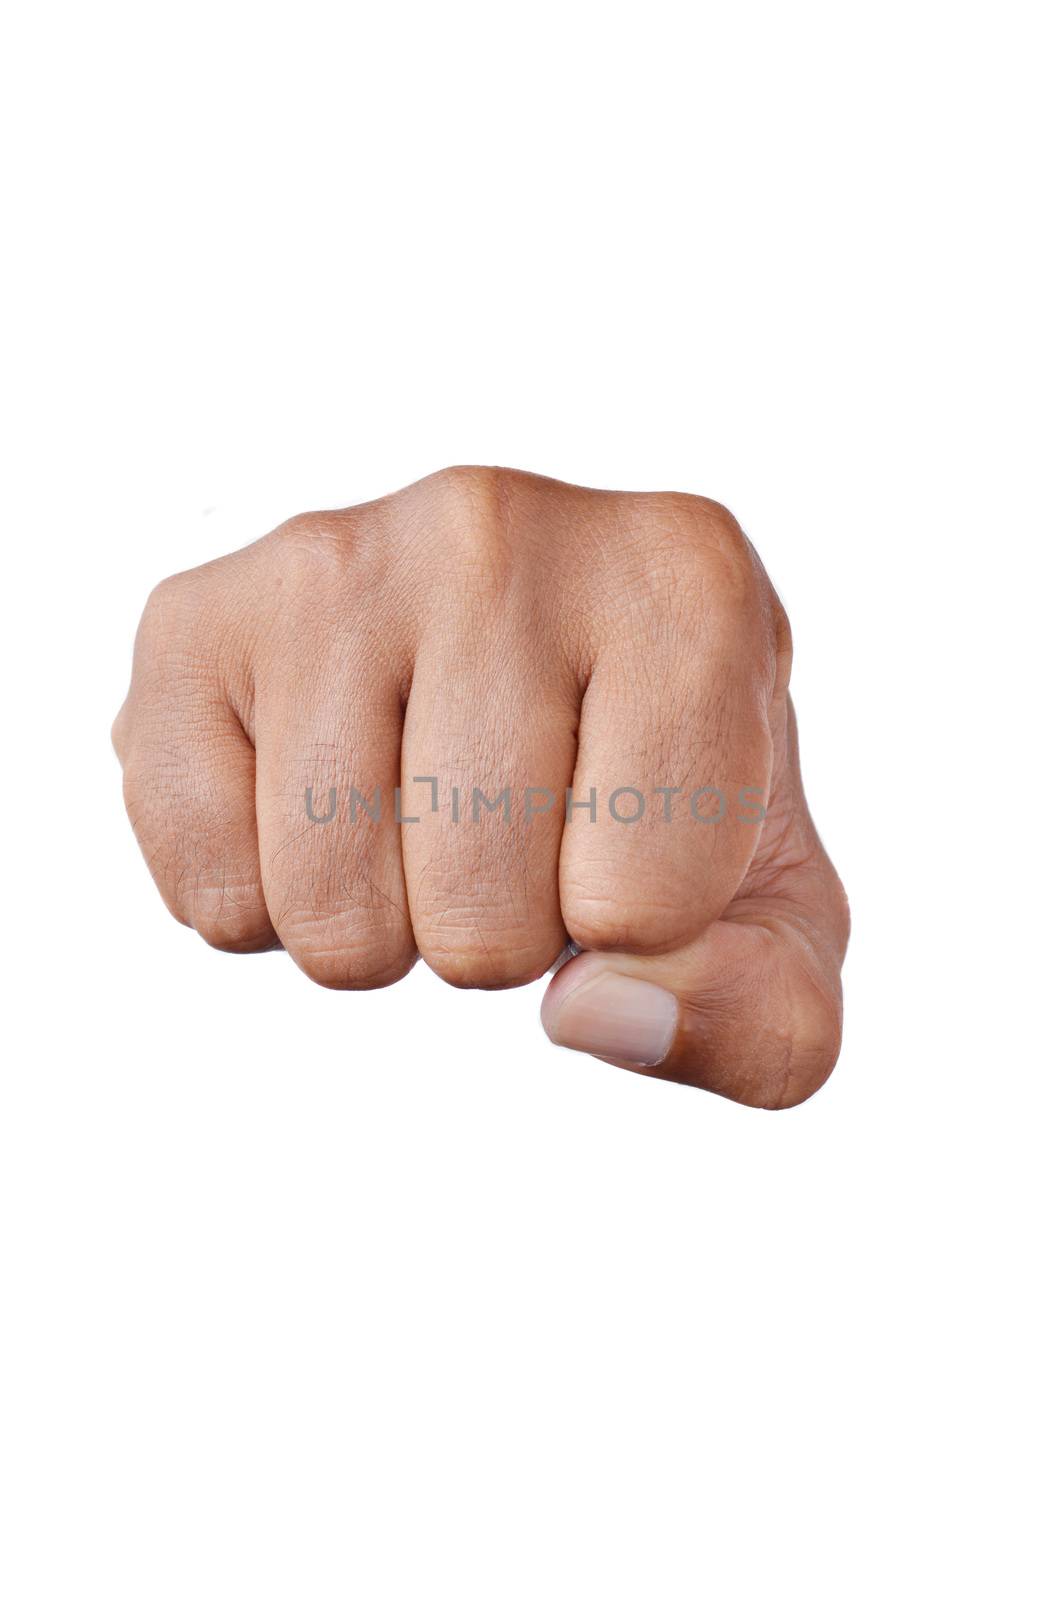 fist by antonihalim